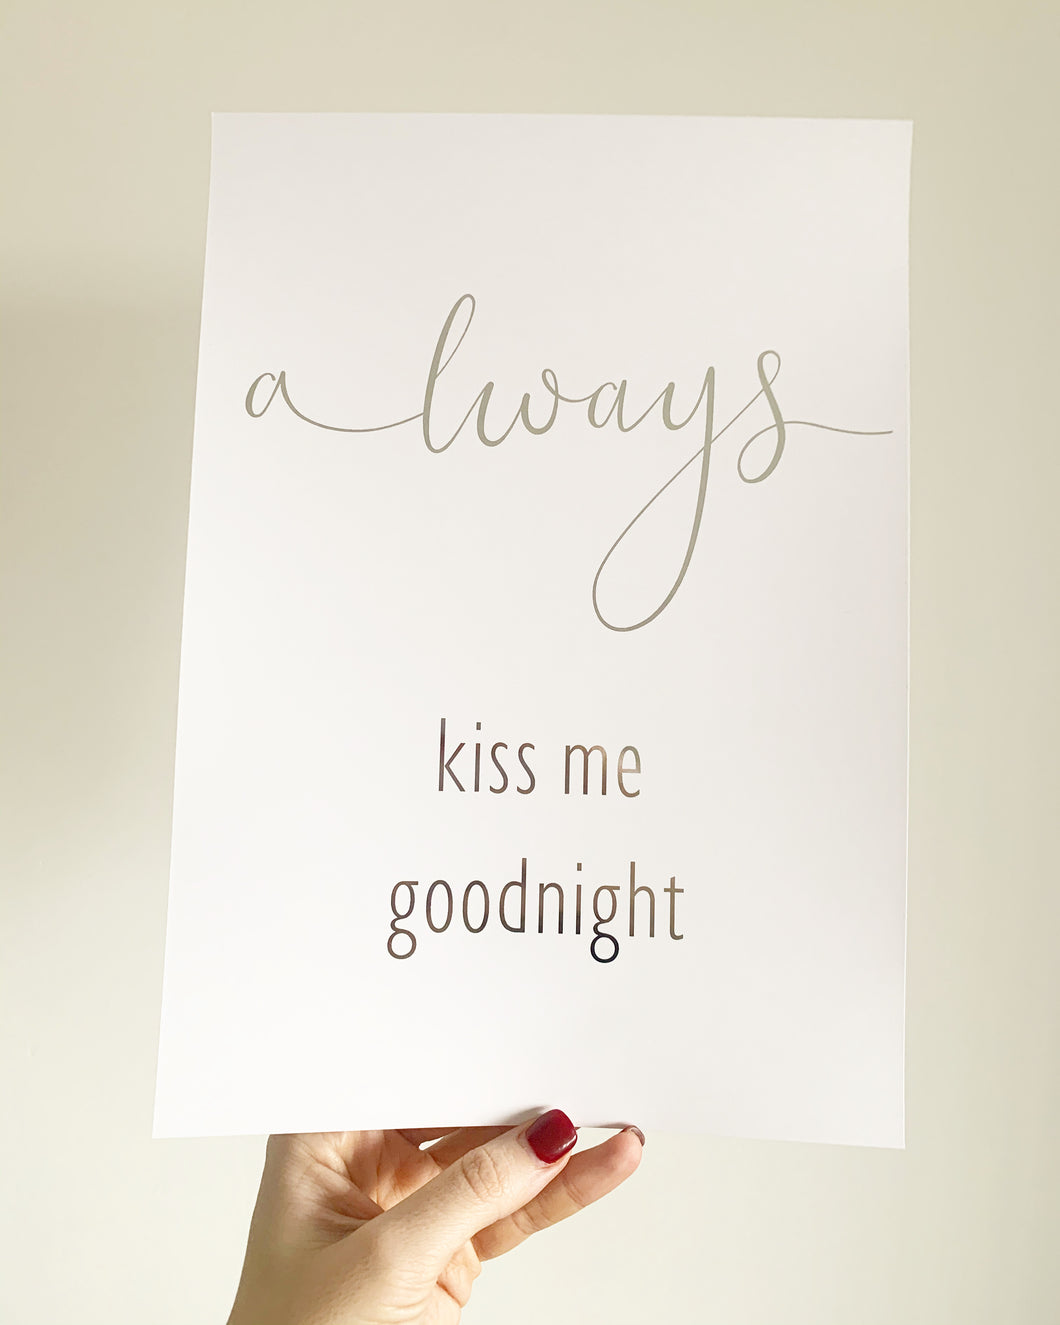 Always kiss me goodnight v2